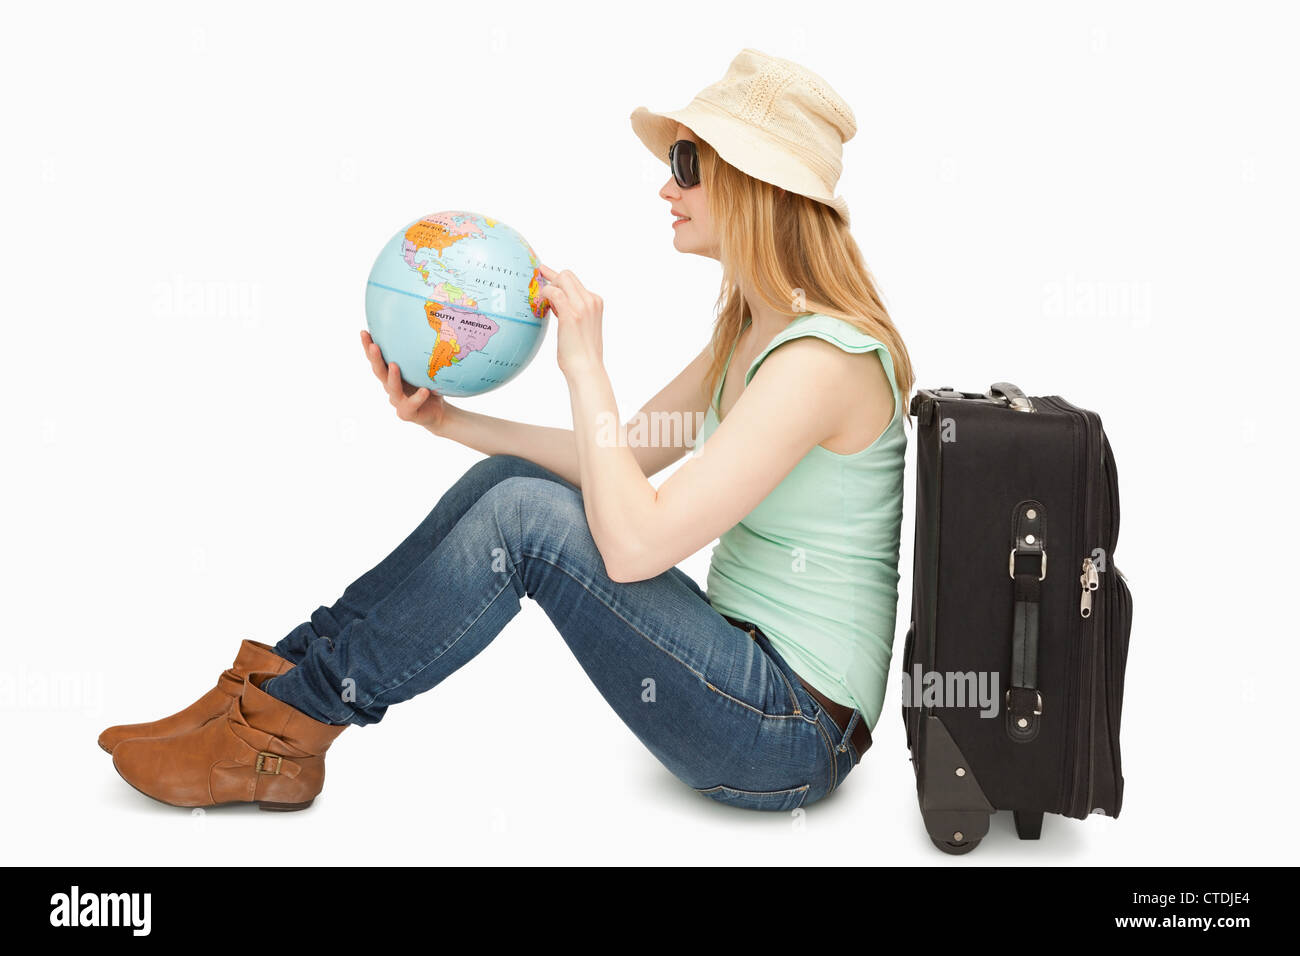 Woman holding a world globe while sitting Stock Photo